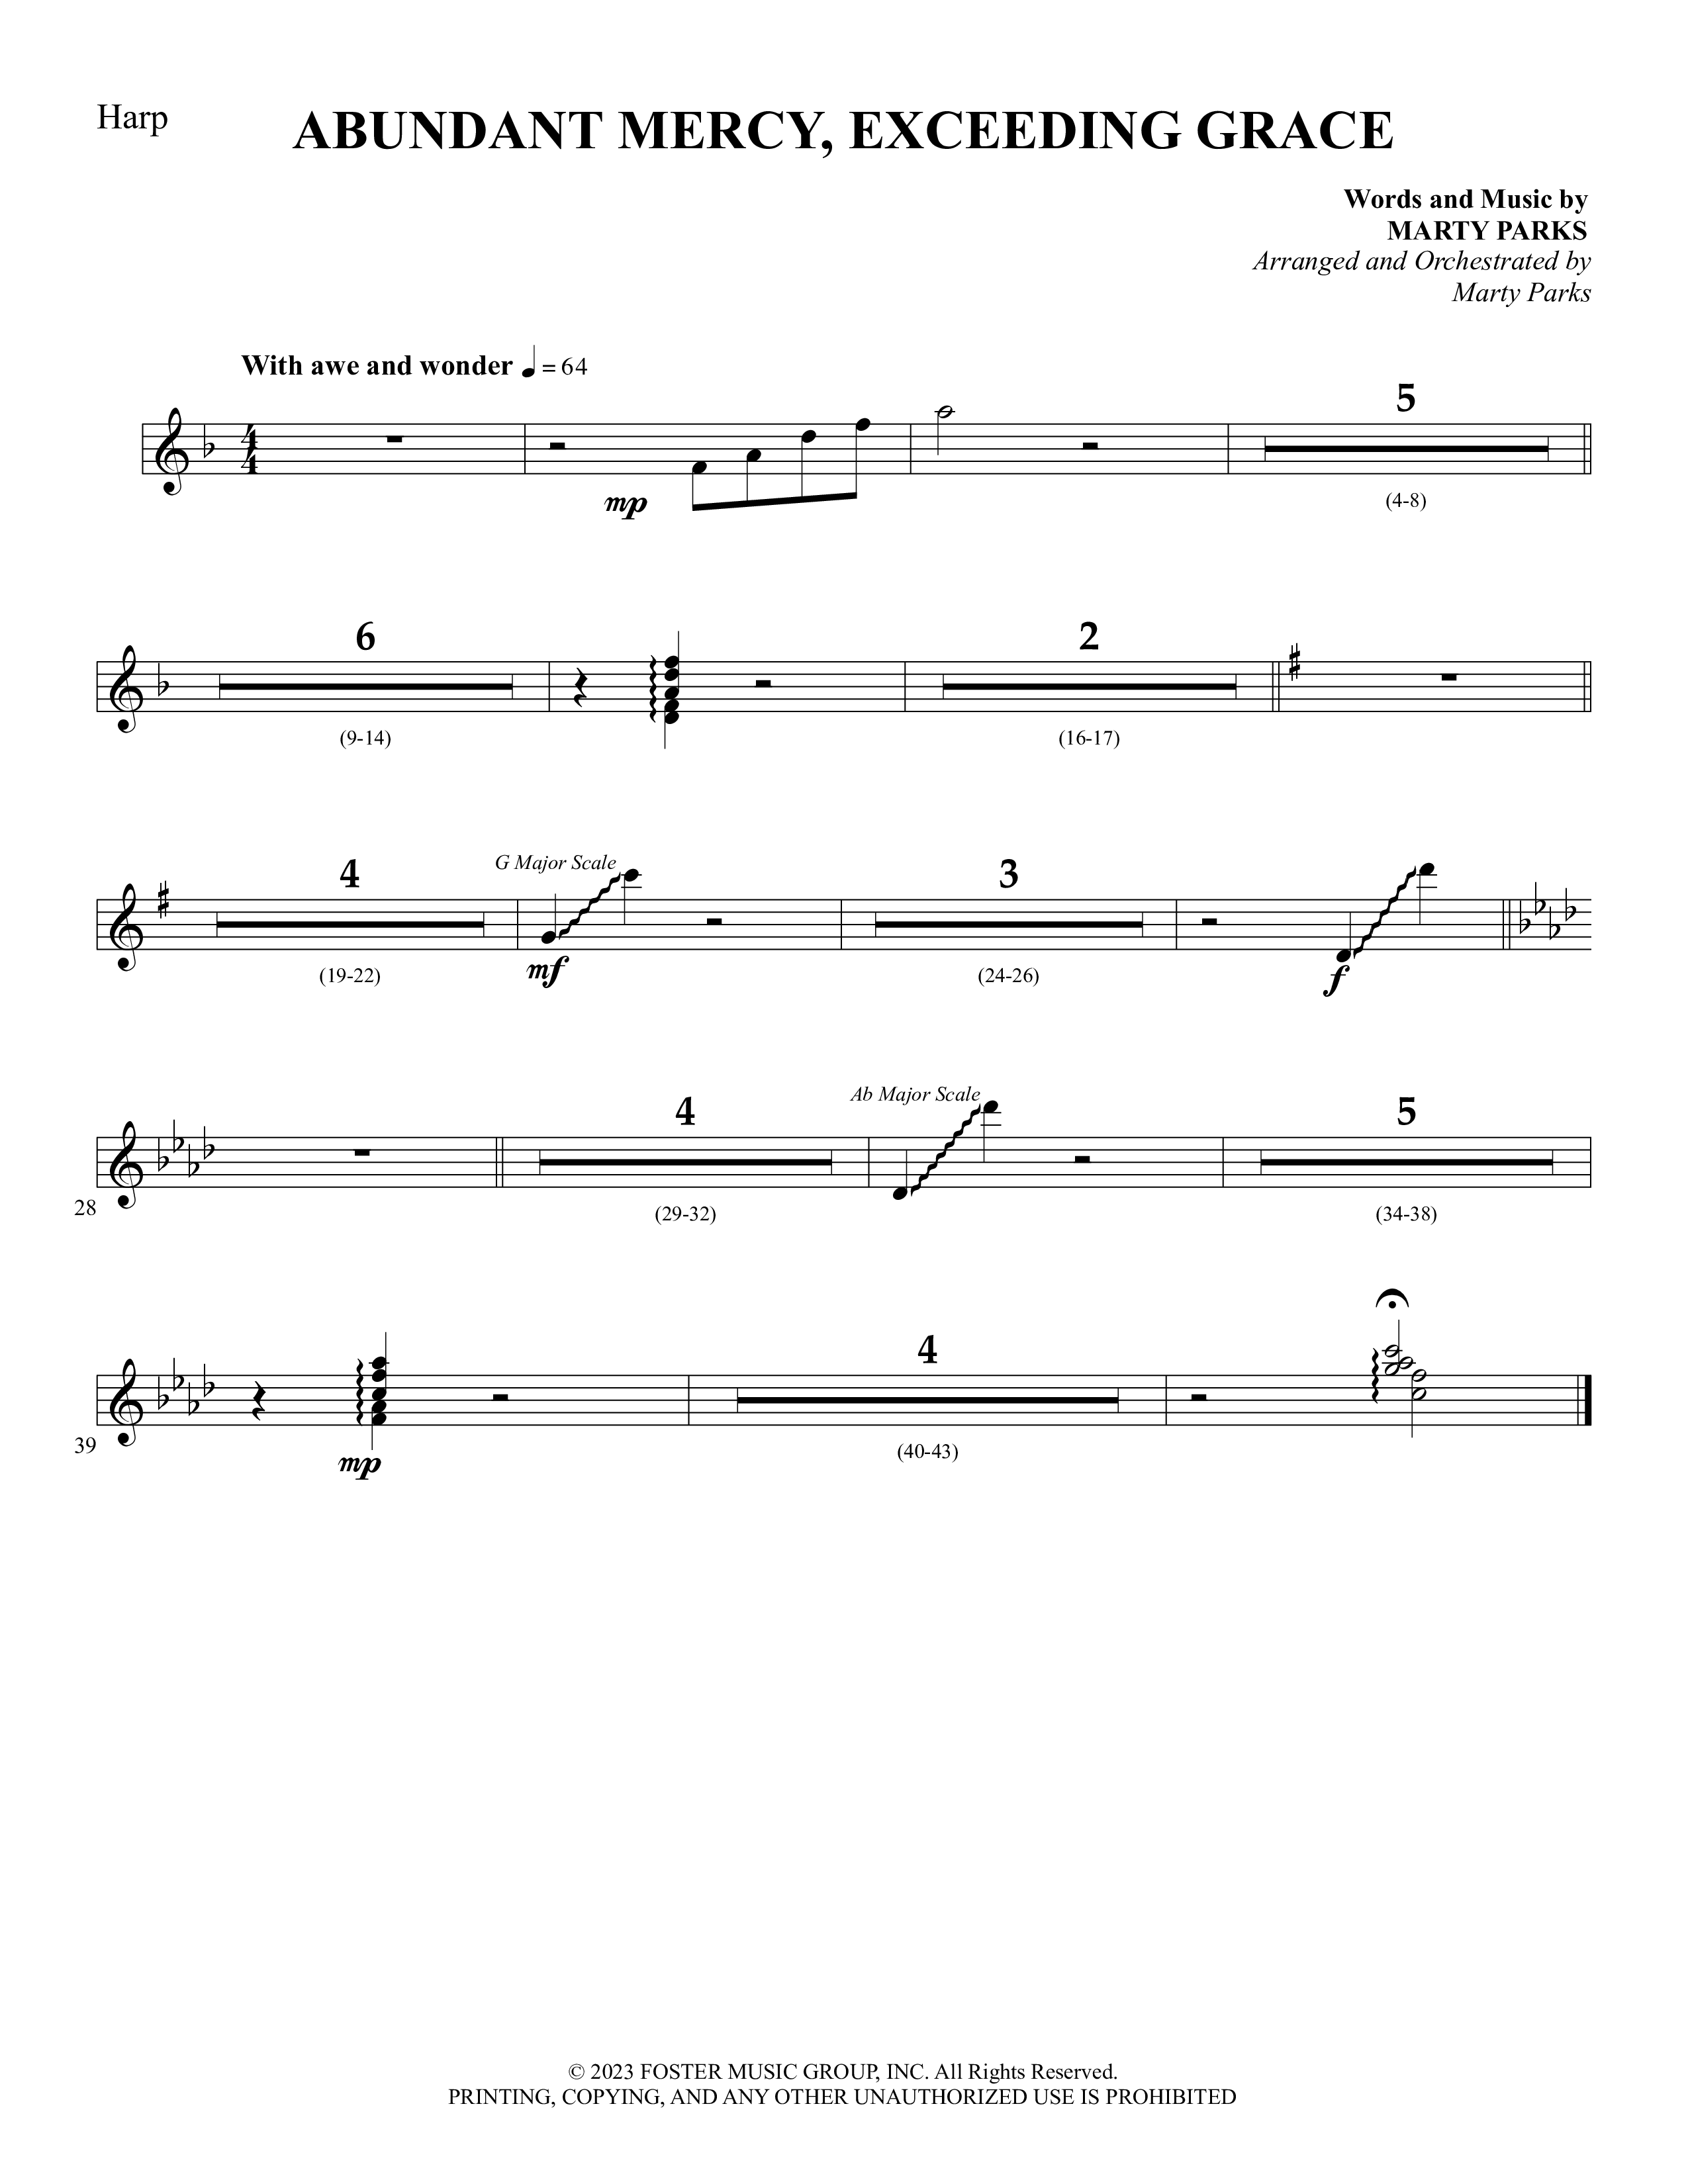 Abundant Mercy Exceeding Grace (Choral Anthem SATB) Harp (Foster Music Group / Arr. Marty Parks)